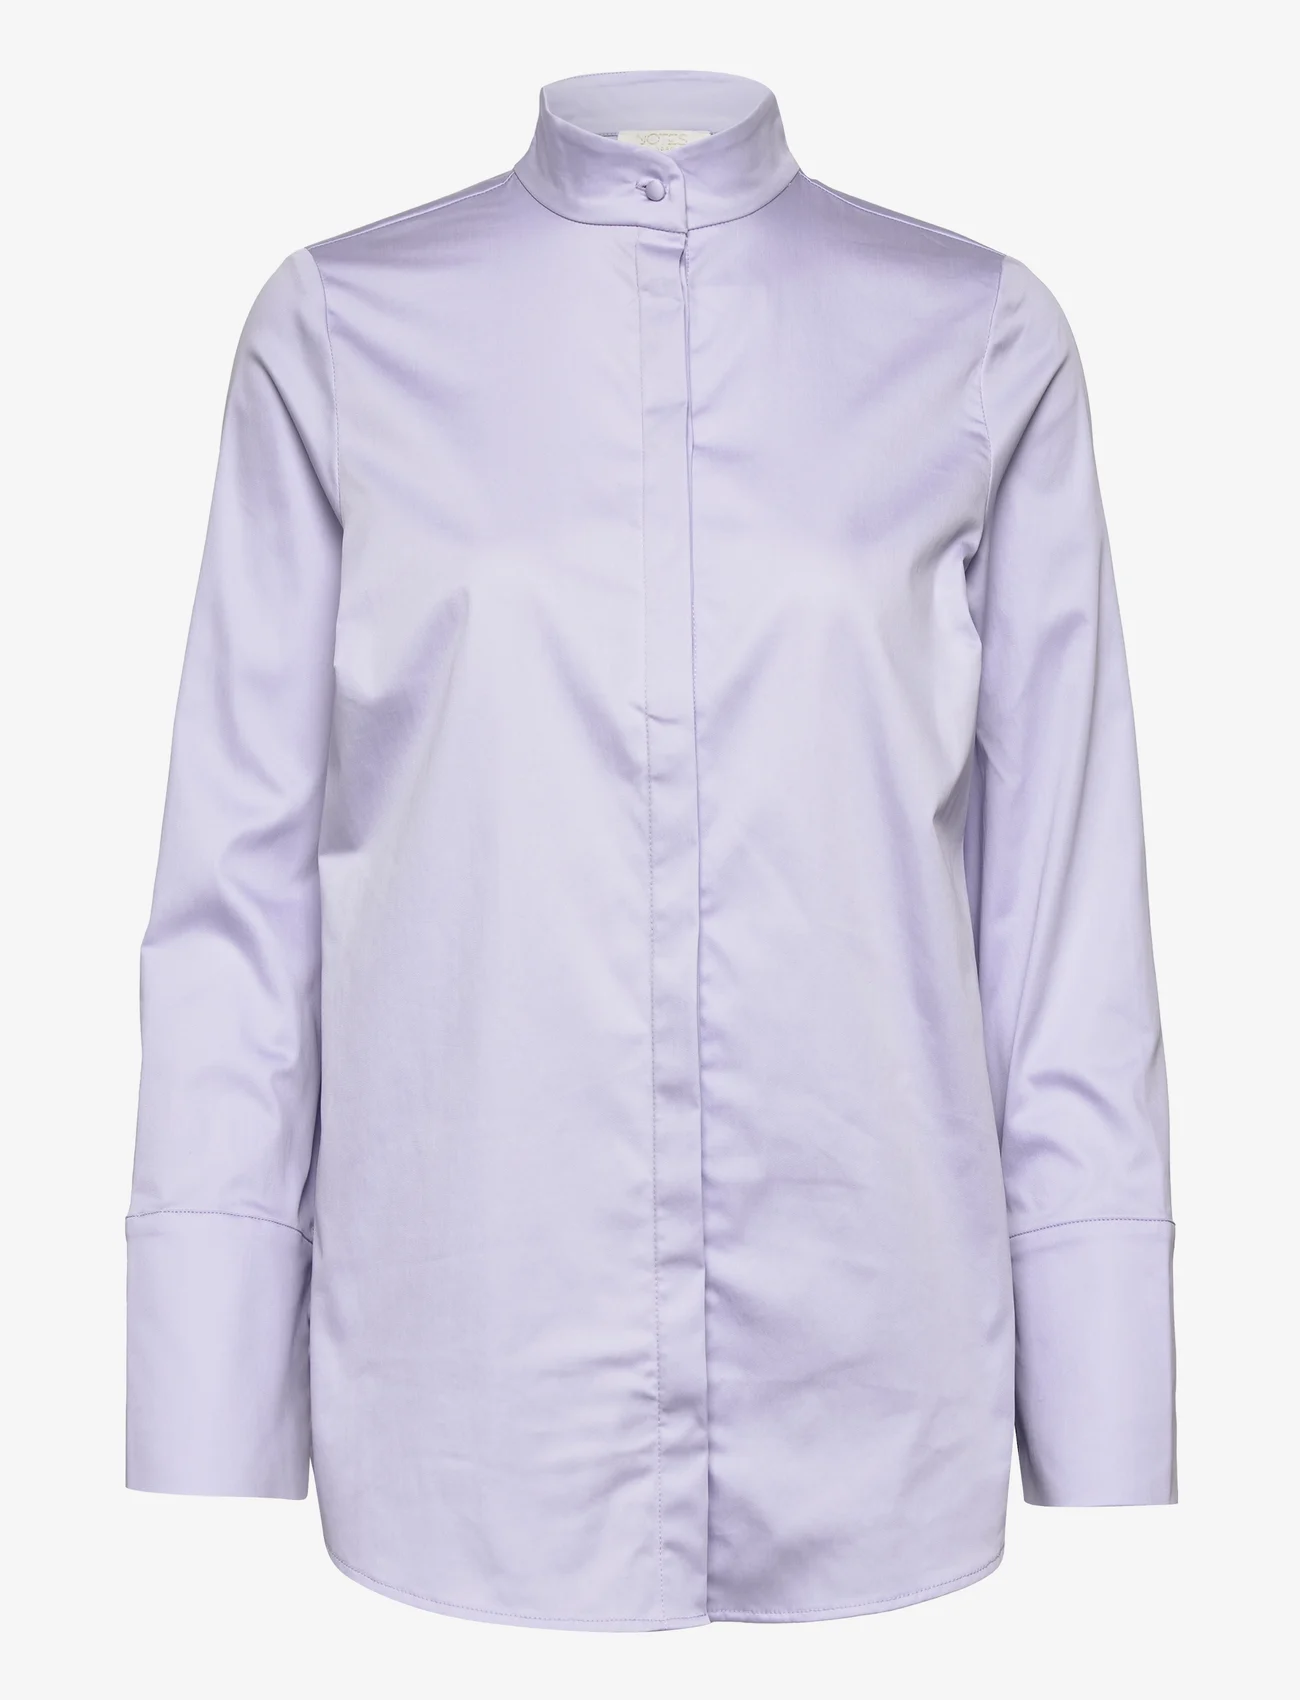 Notes du Nord - Davina Shirt - langärmlige hemden - lavender - 0